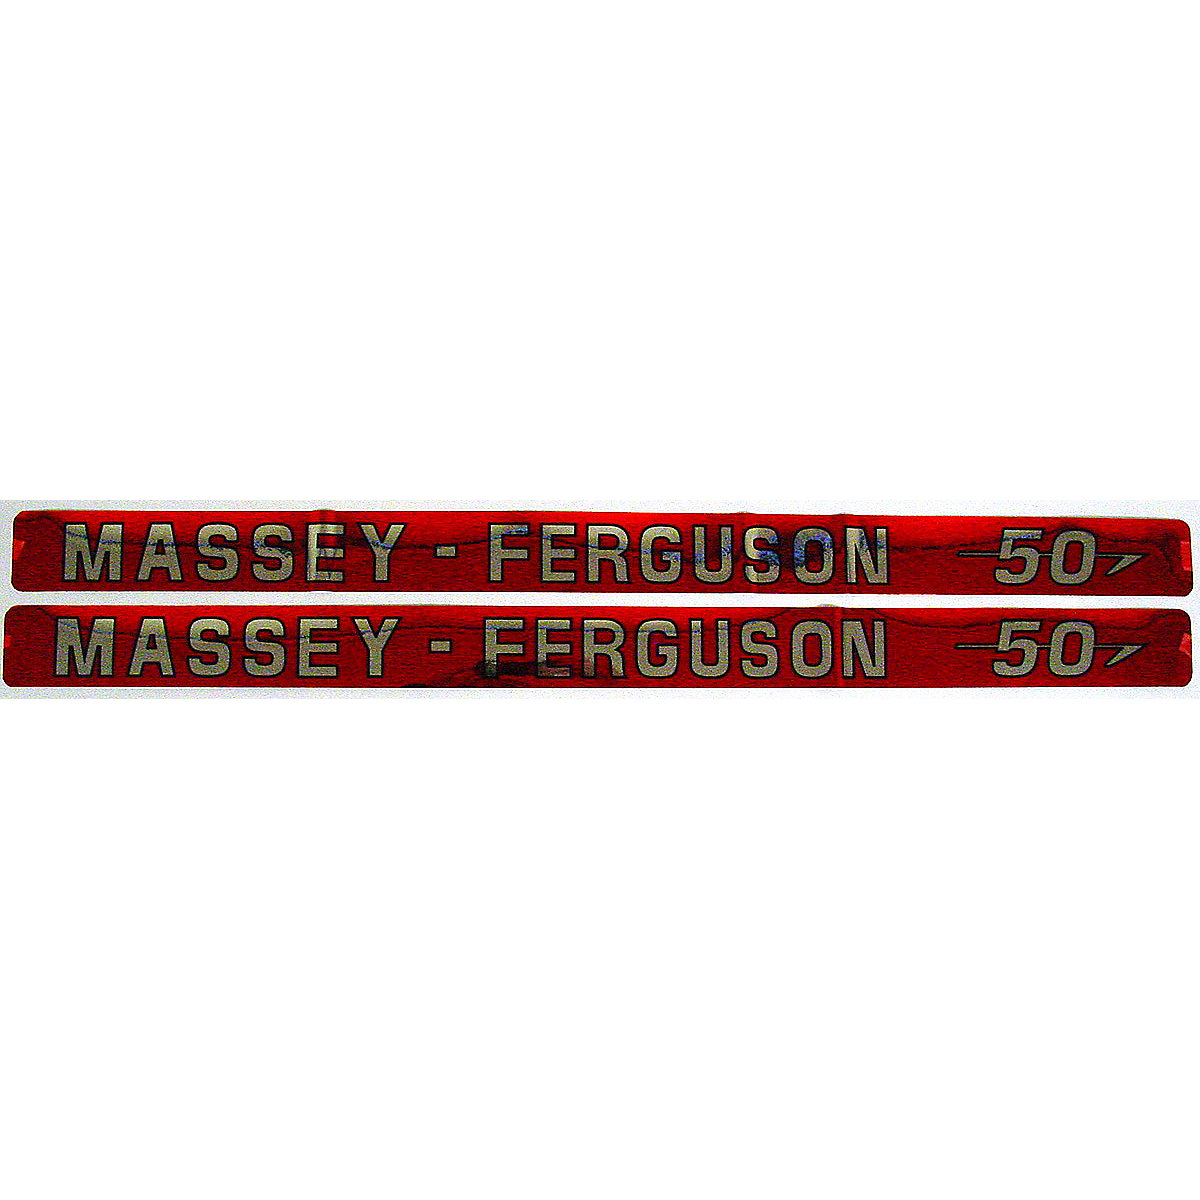 Mylar Hood Decal Set For Massey Ferguson: 50.